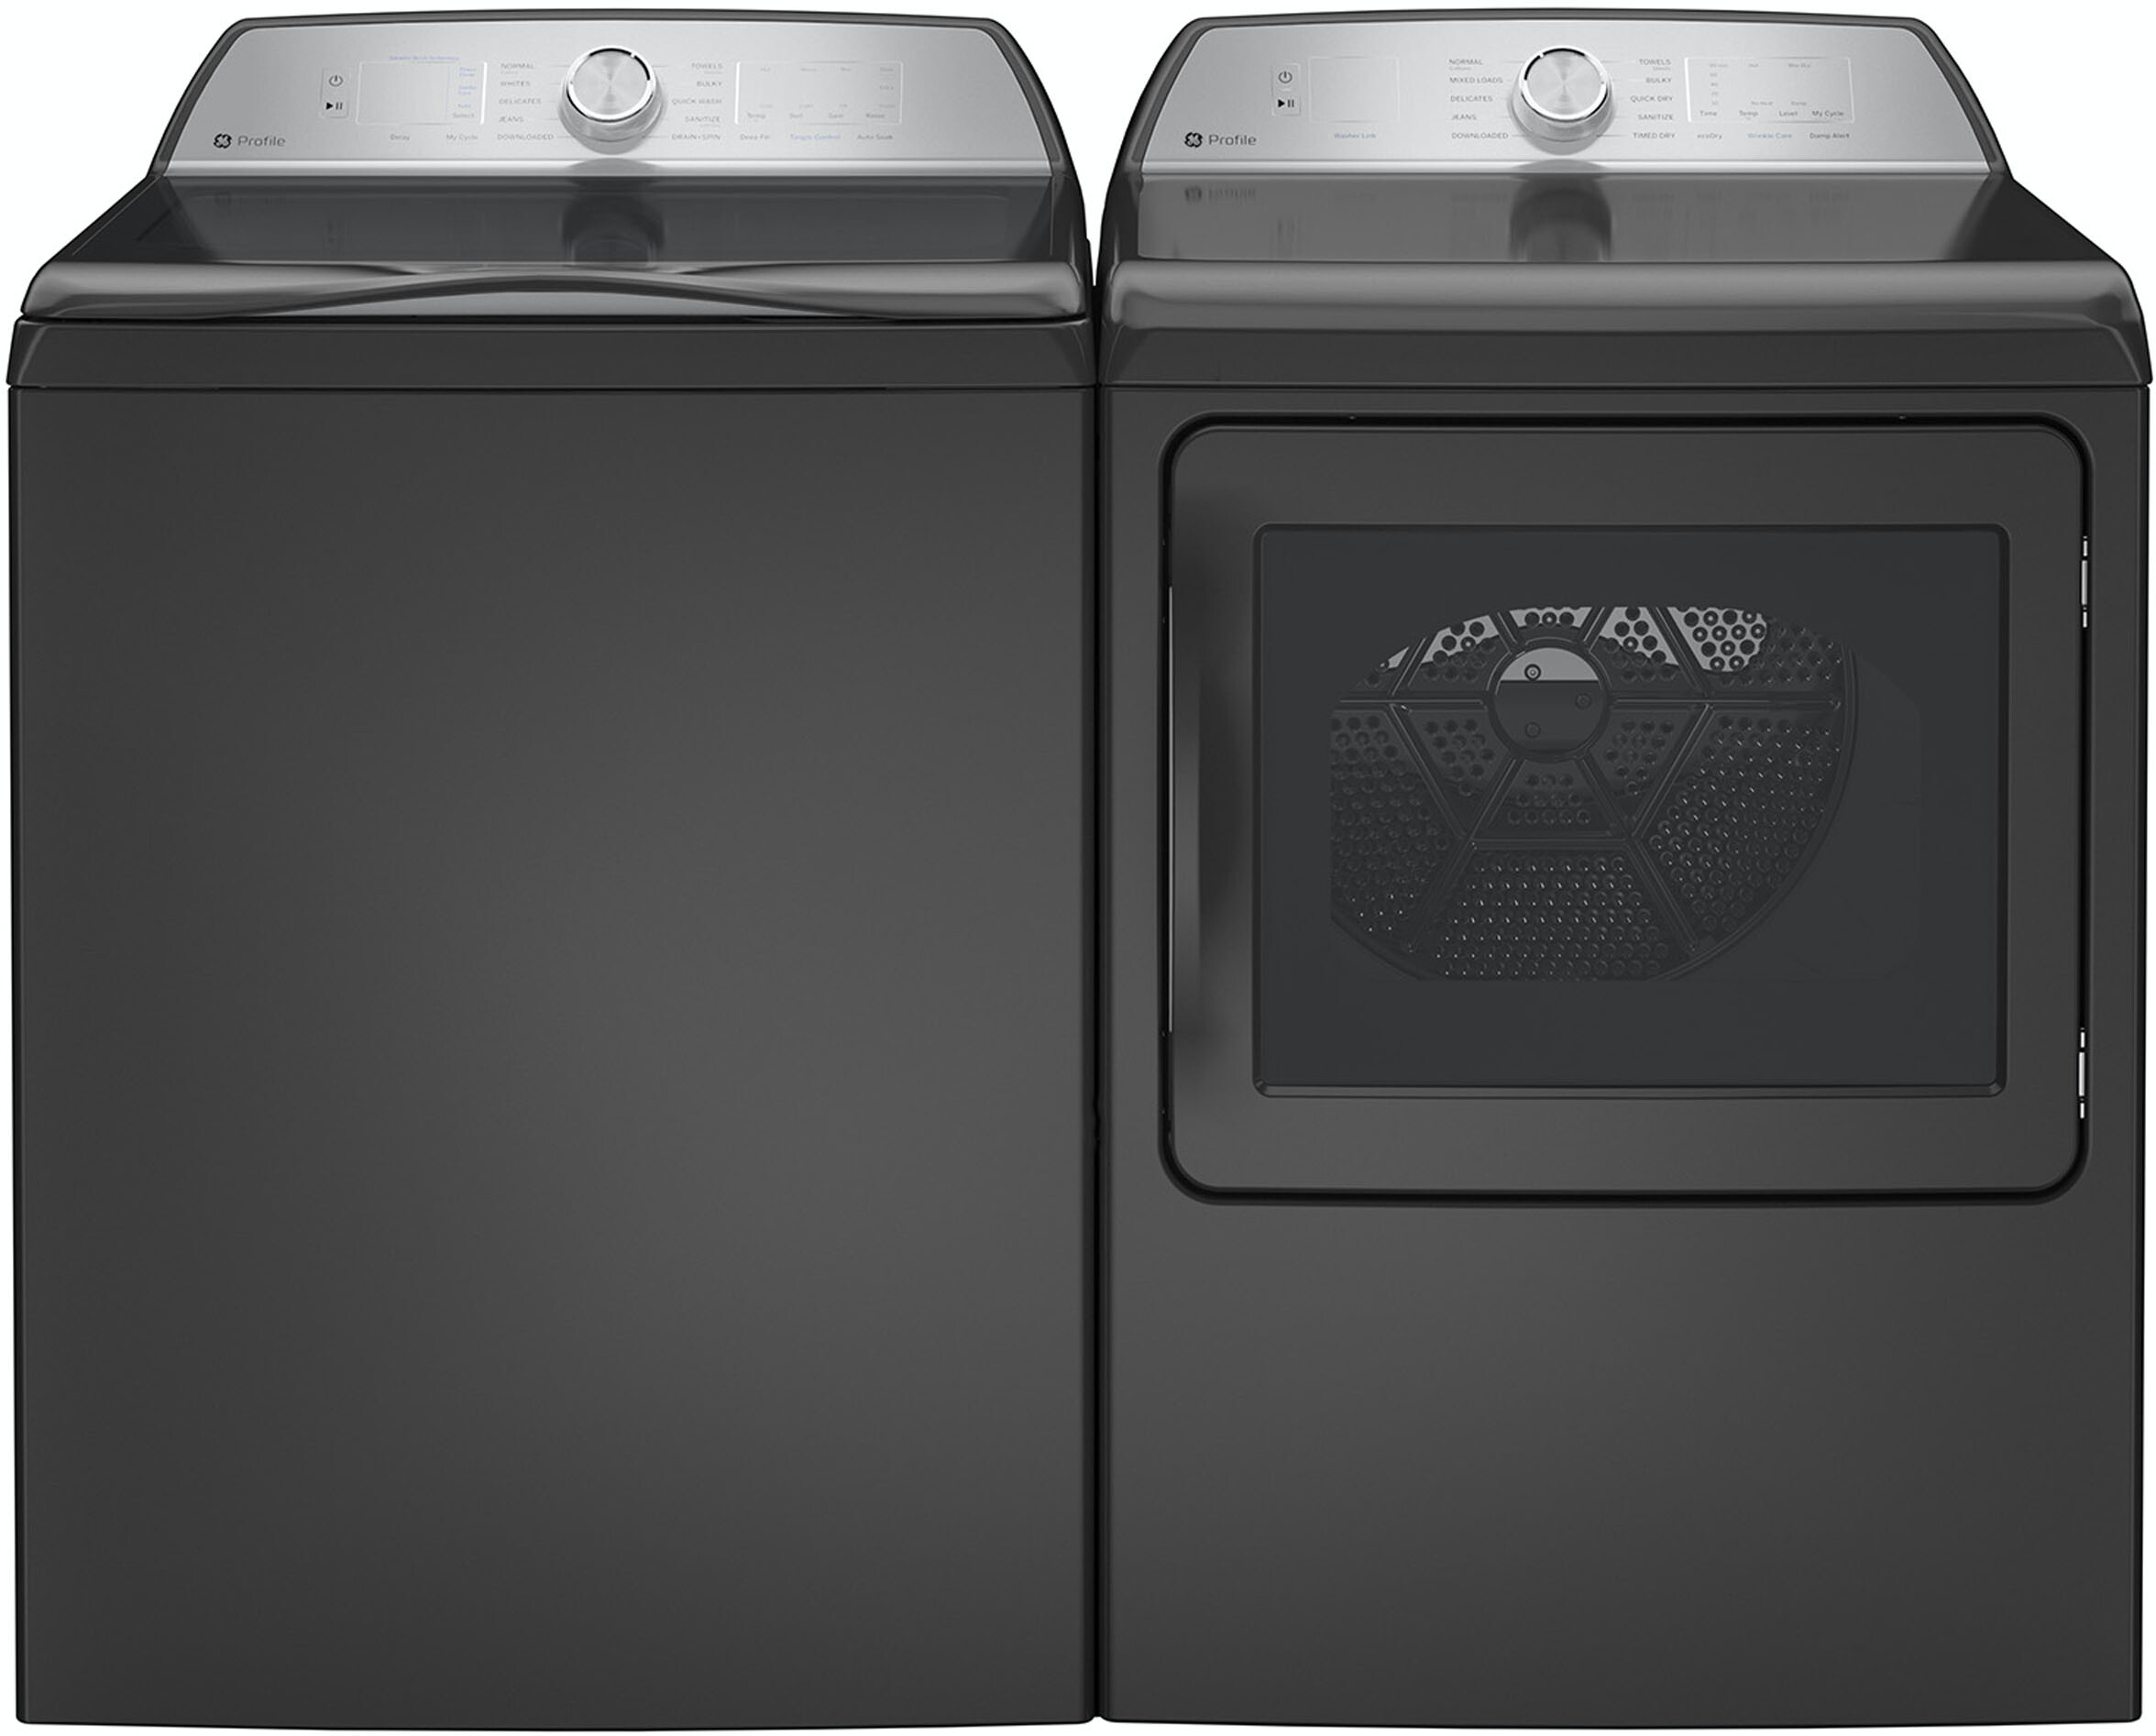 GE Top Load Washer & Dryer Set GEWADREDG605 -  PTW605BPRDG